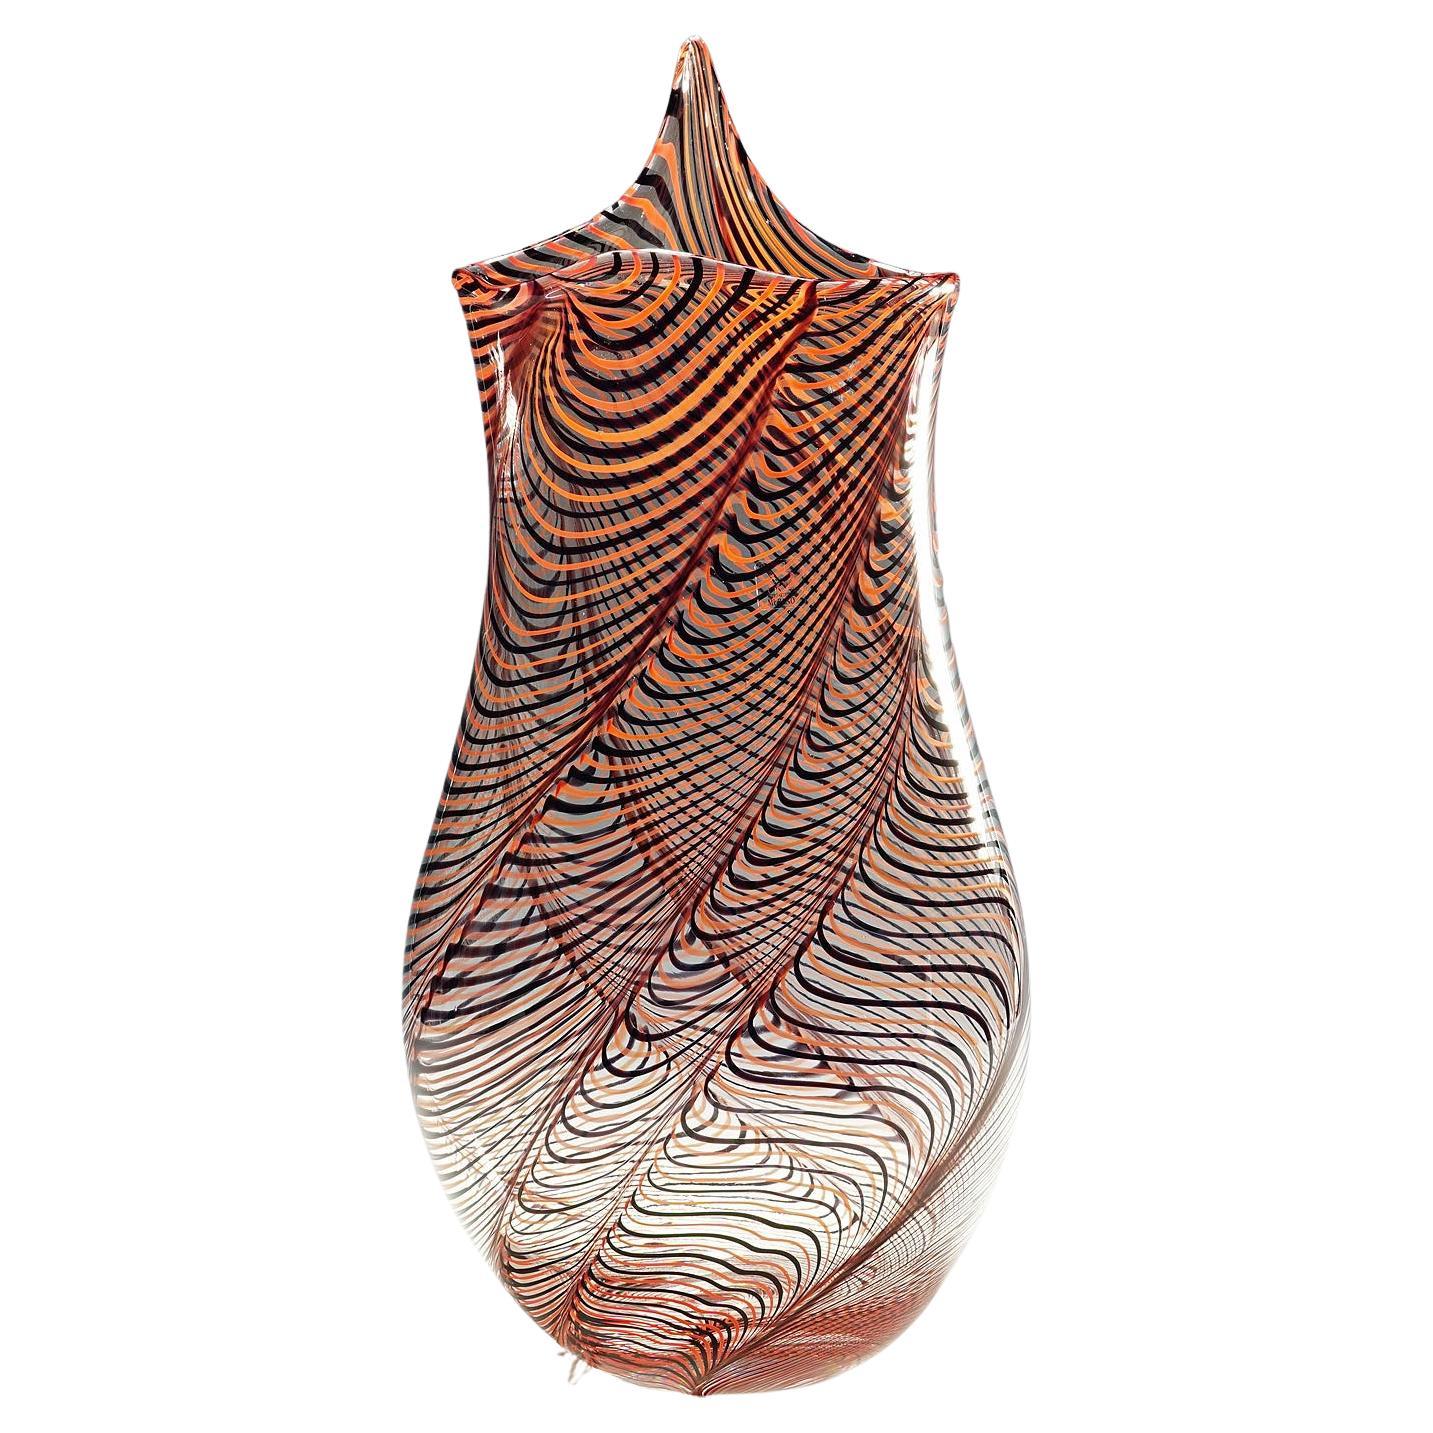 Grand vase en verre d'art de Luca Vidal, Murano